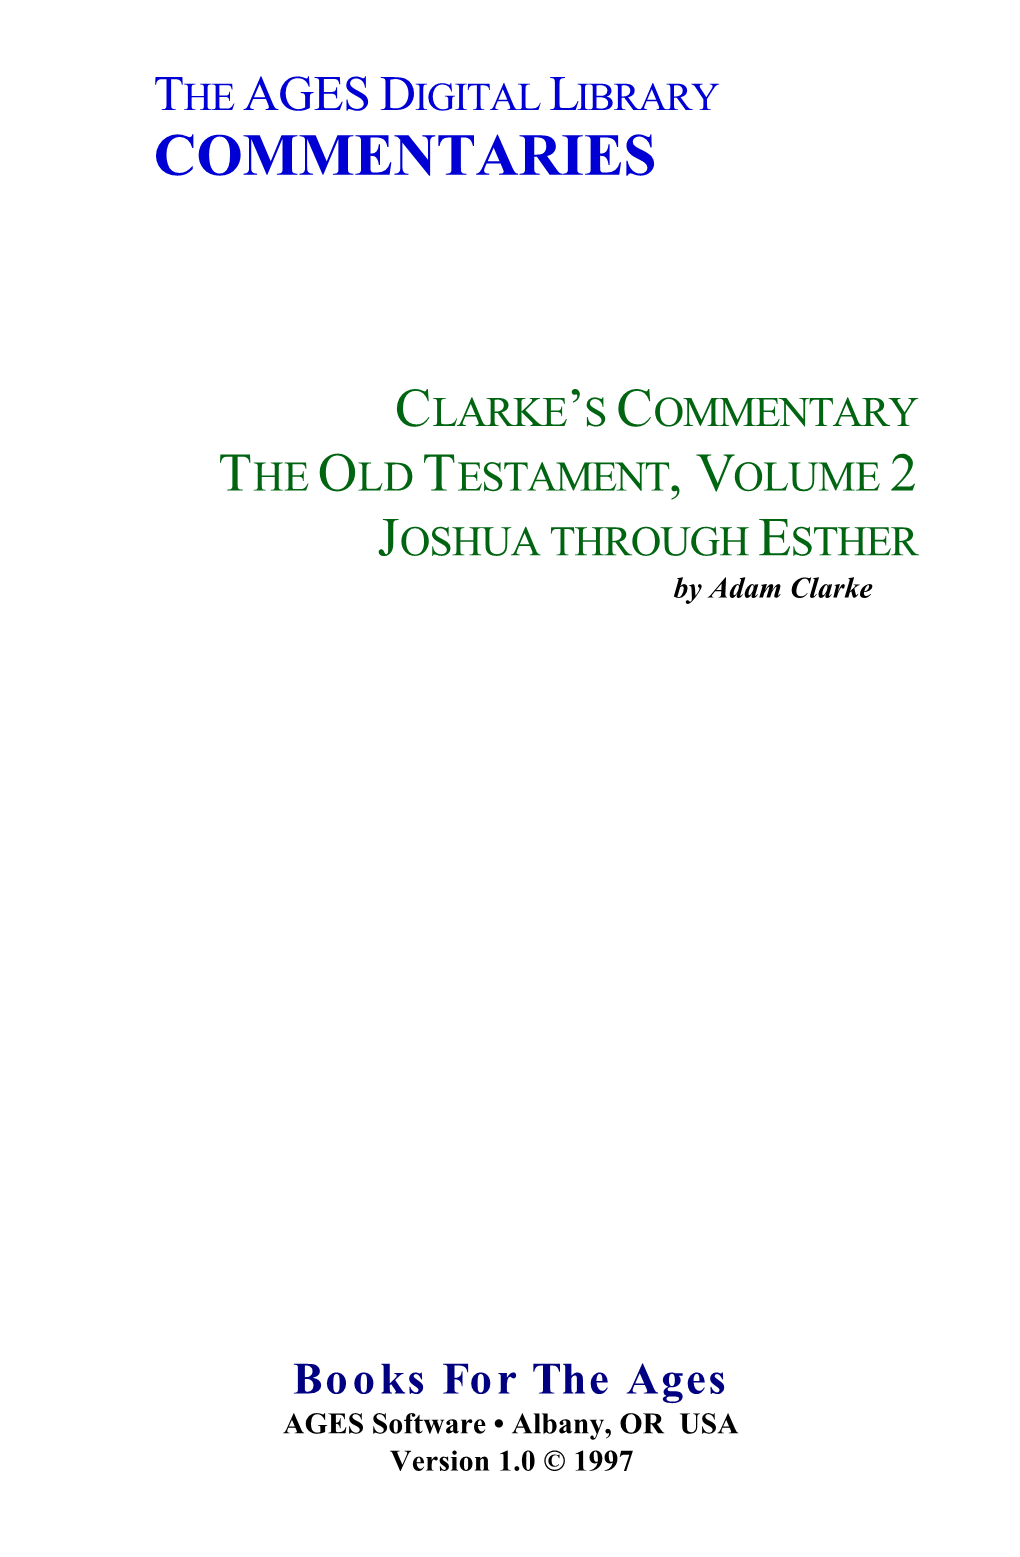 Clarke's Commentary